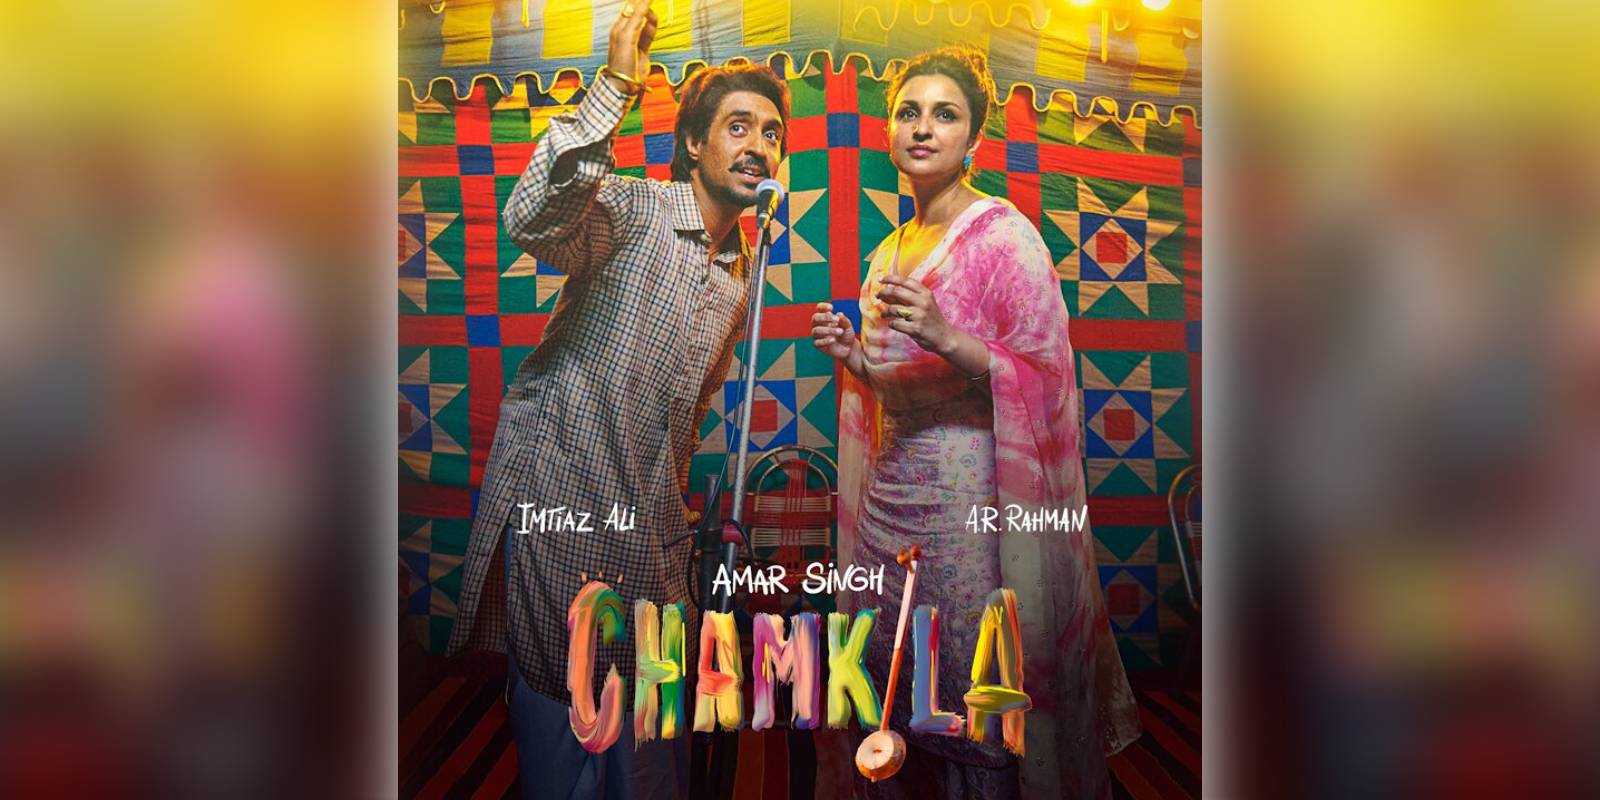 A poster of the film Amar Singh Chamkila